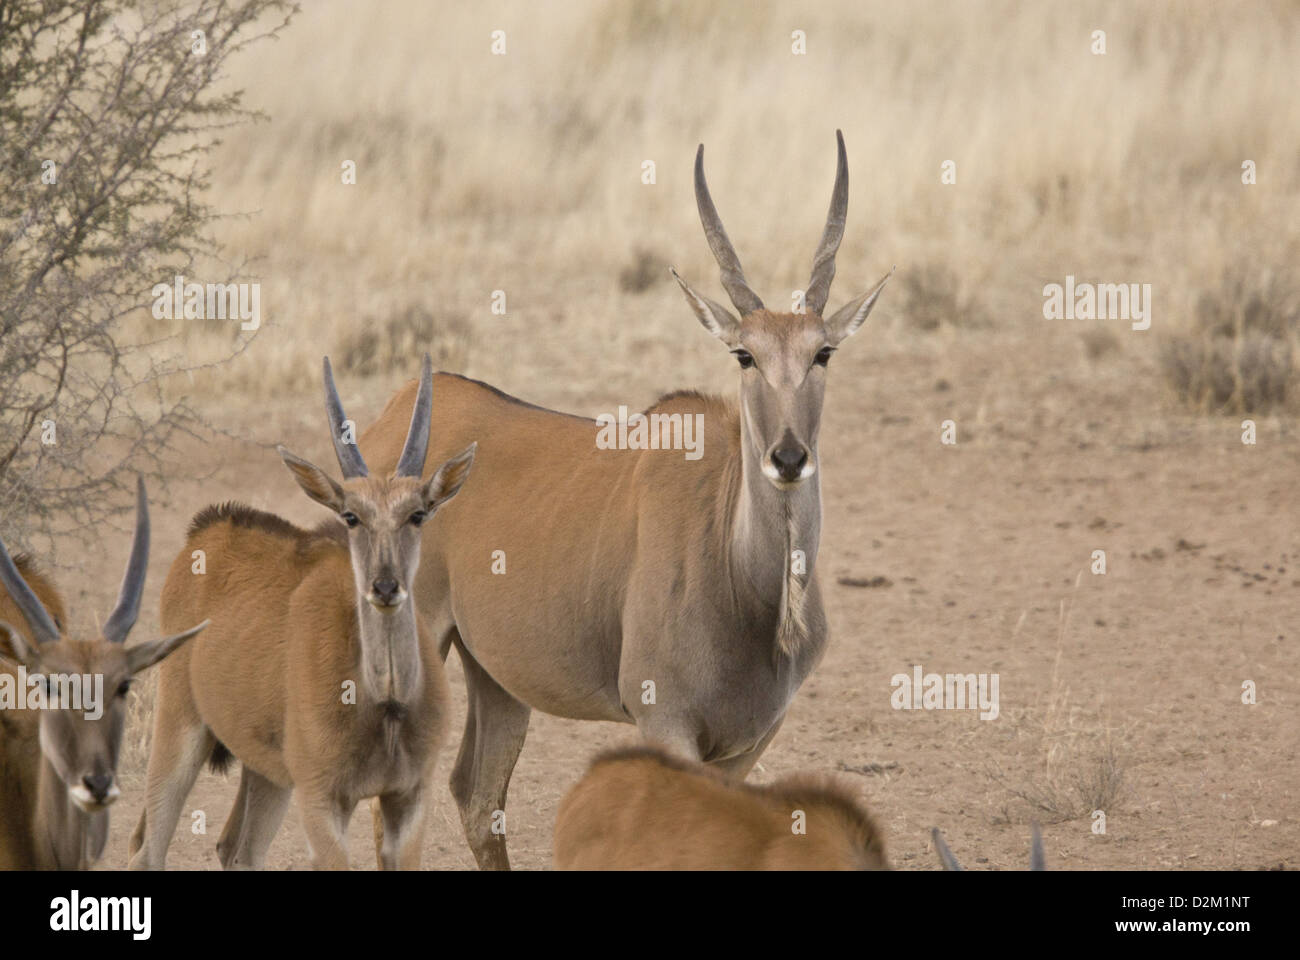 Grupo de eland común (Taurotragus oryx) del desierto de Kalahari, Sudáfrica Foto de stock